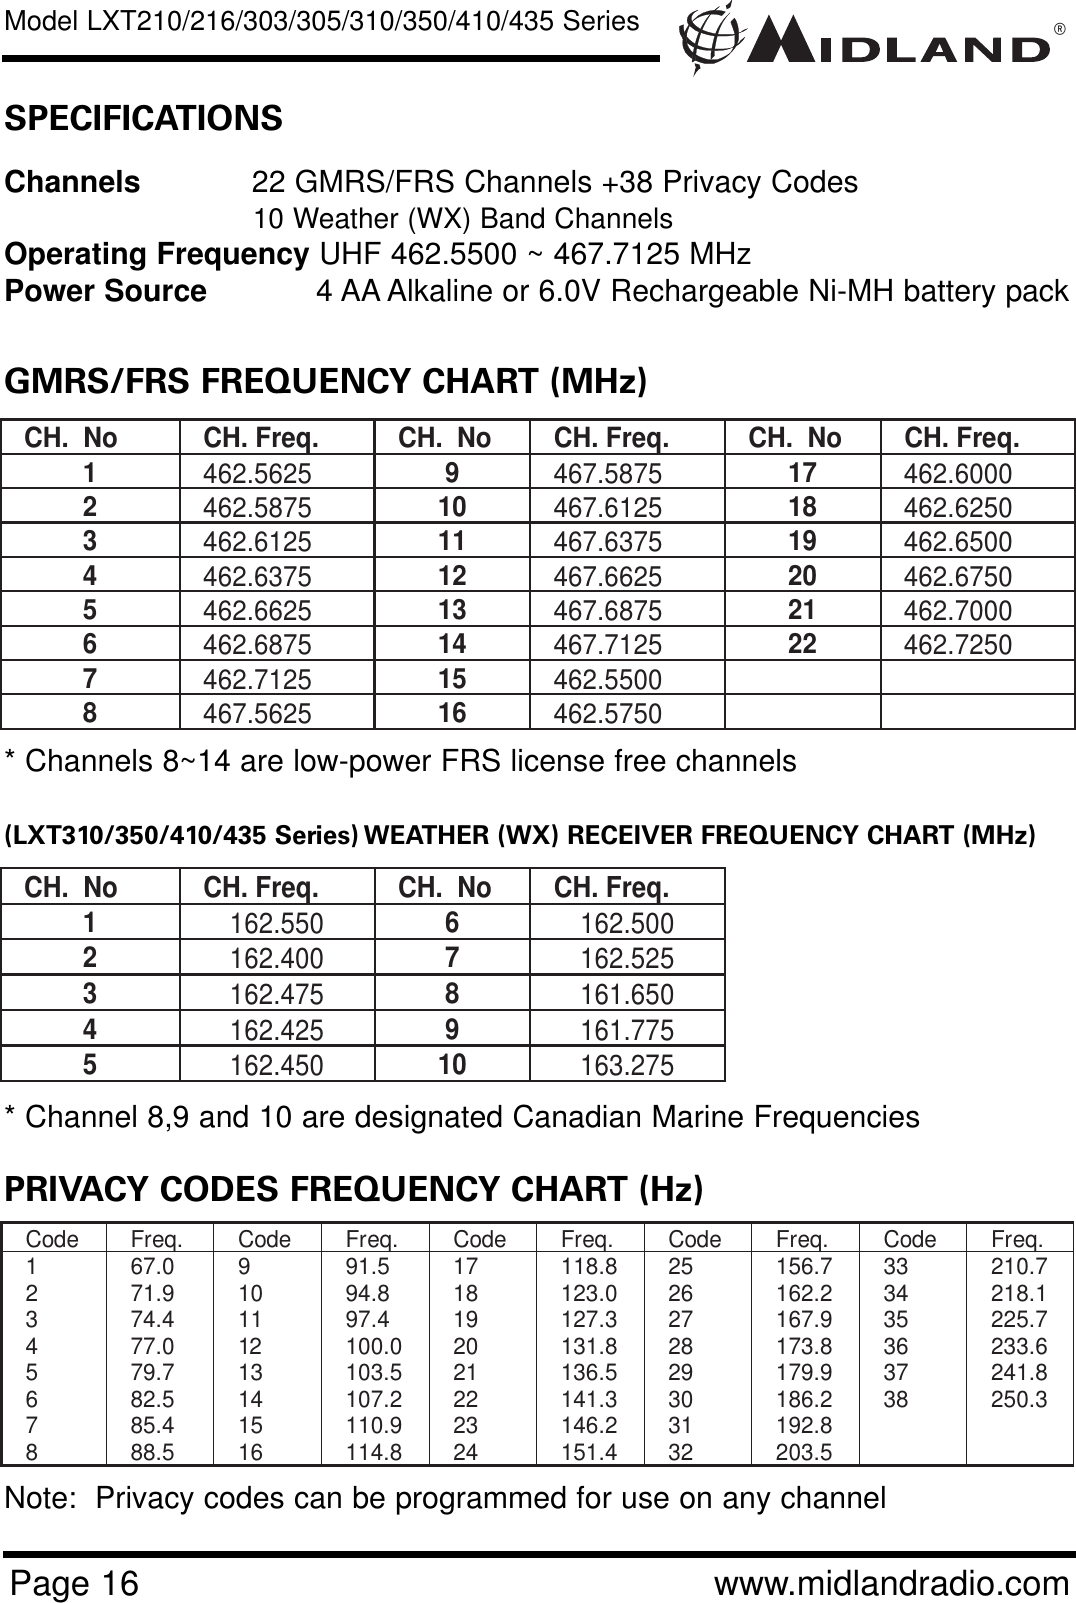 Midland Radio Frequency Chart